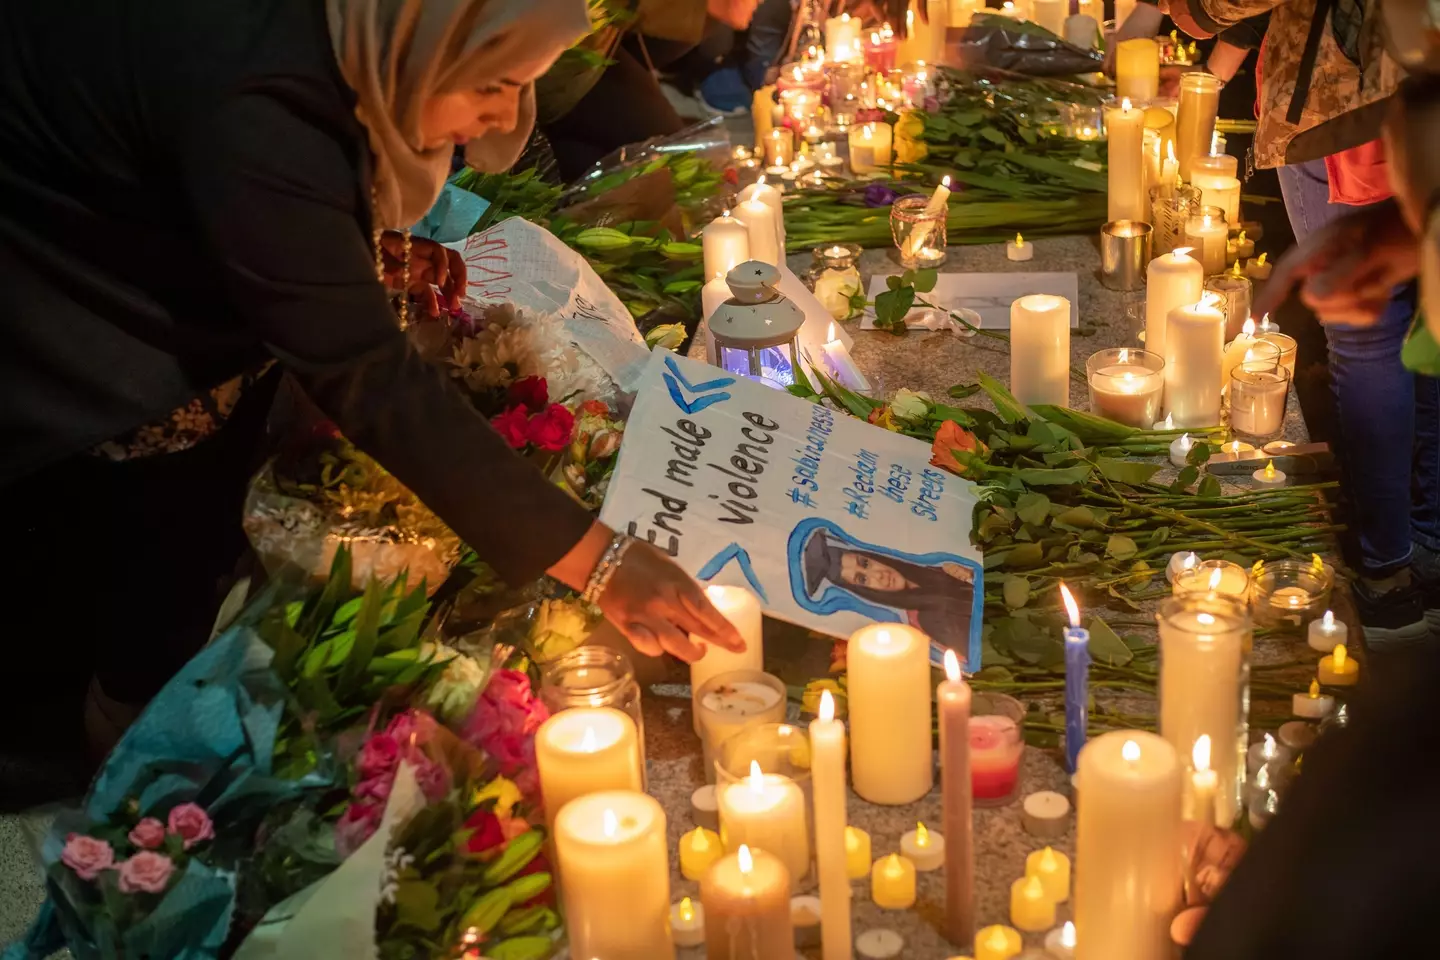 A vigil was held in Sabina Nessa's memory (